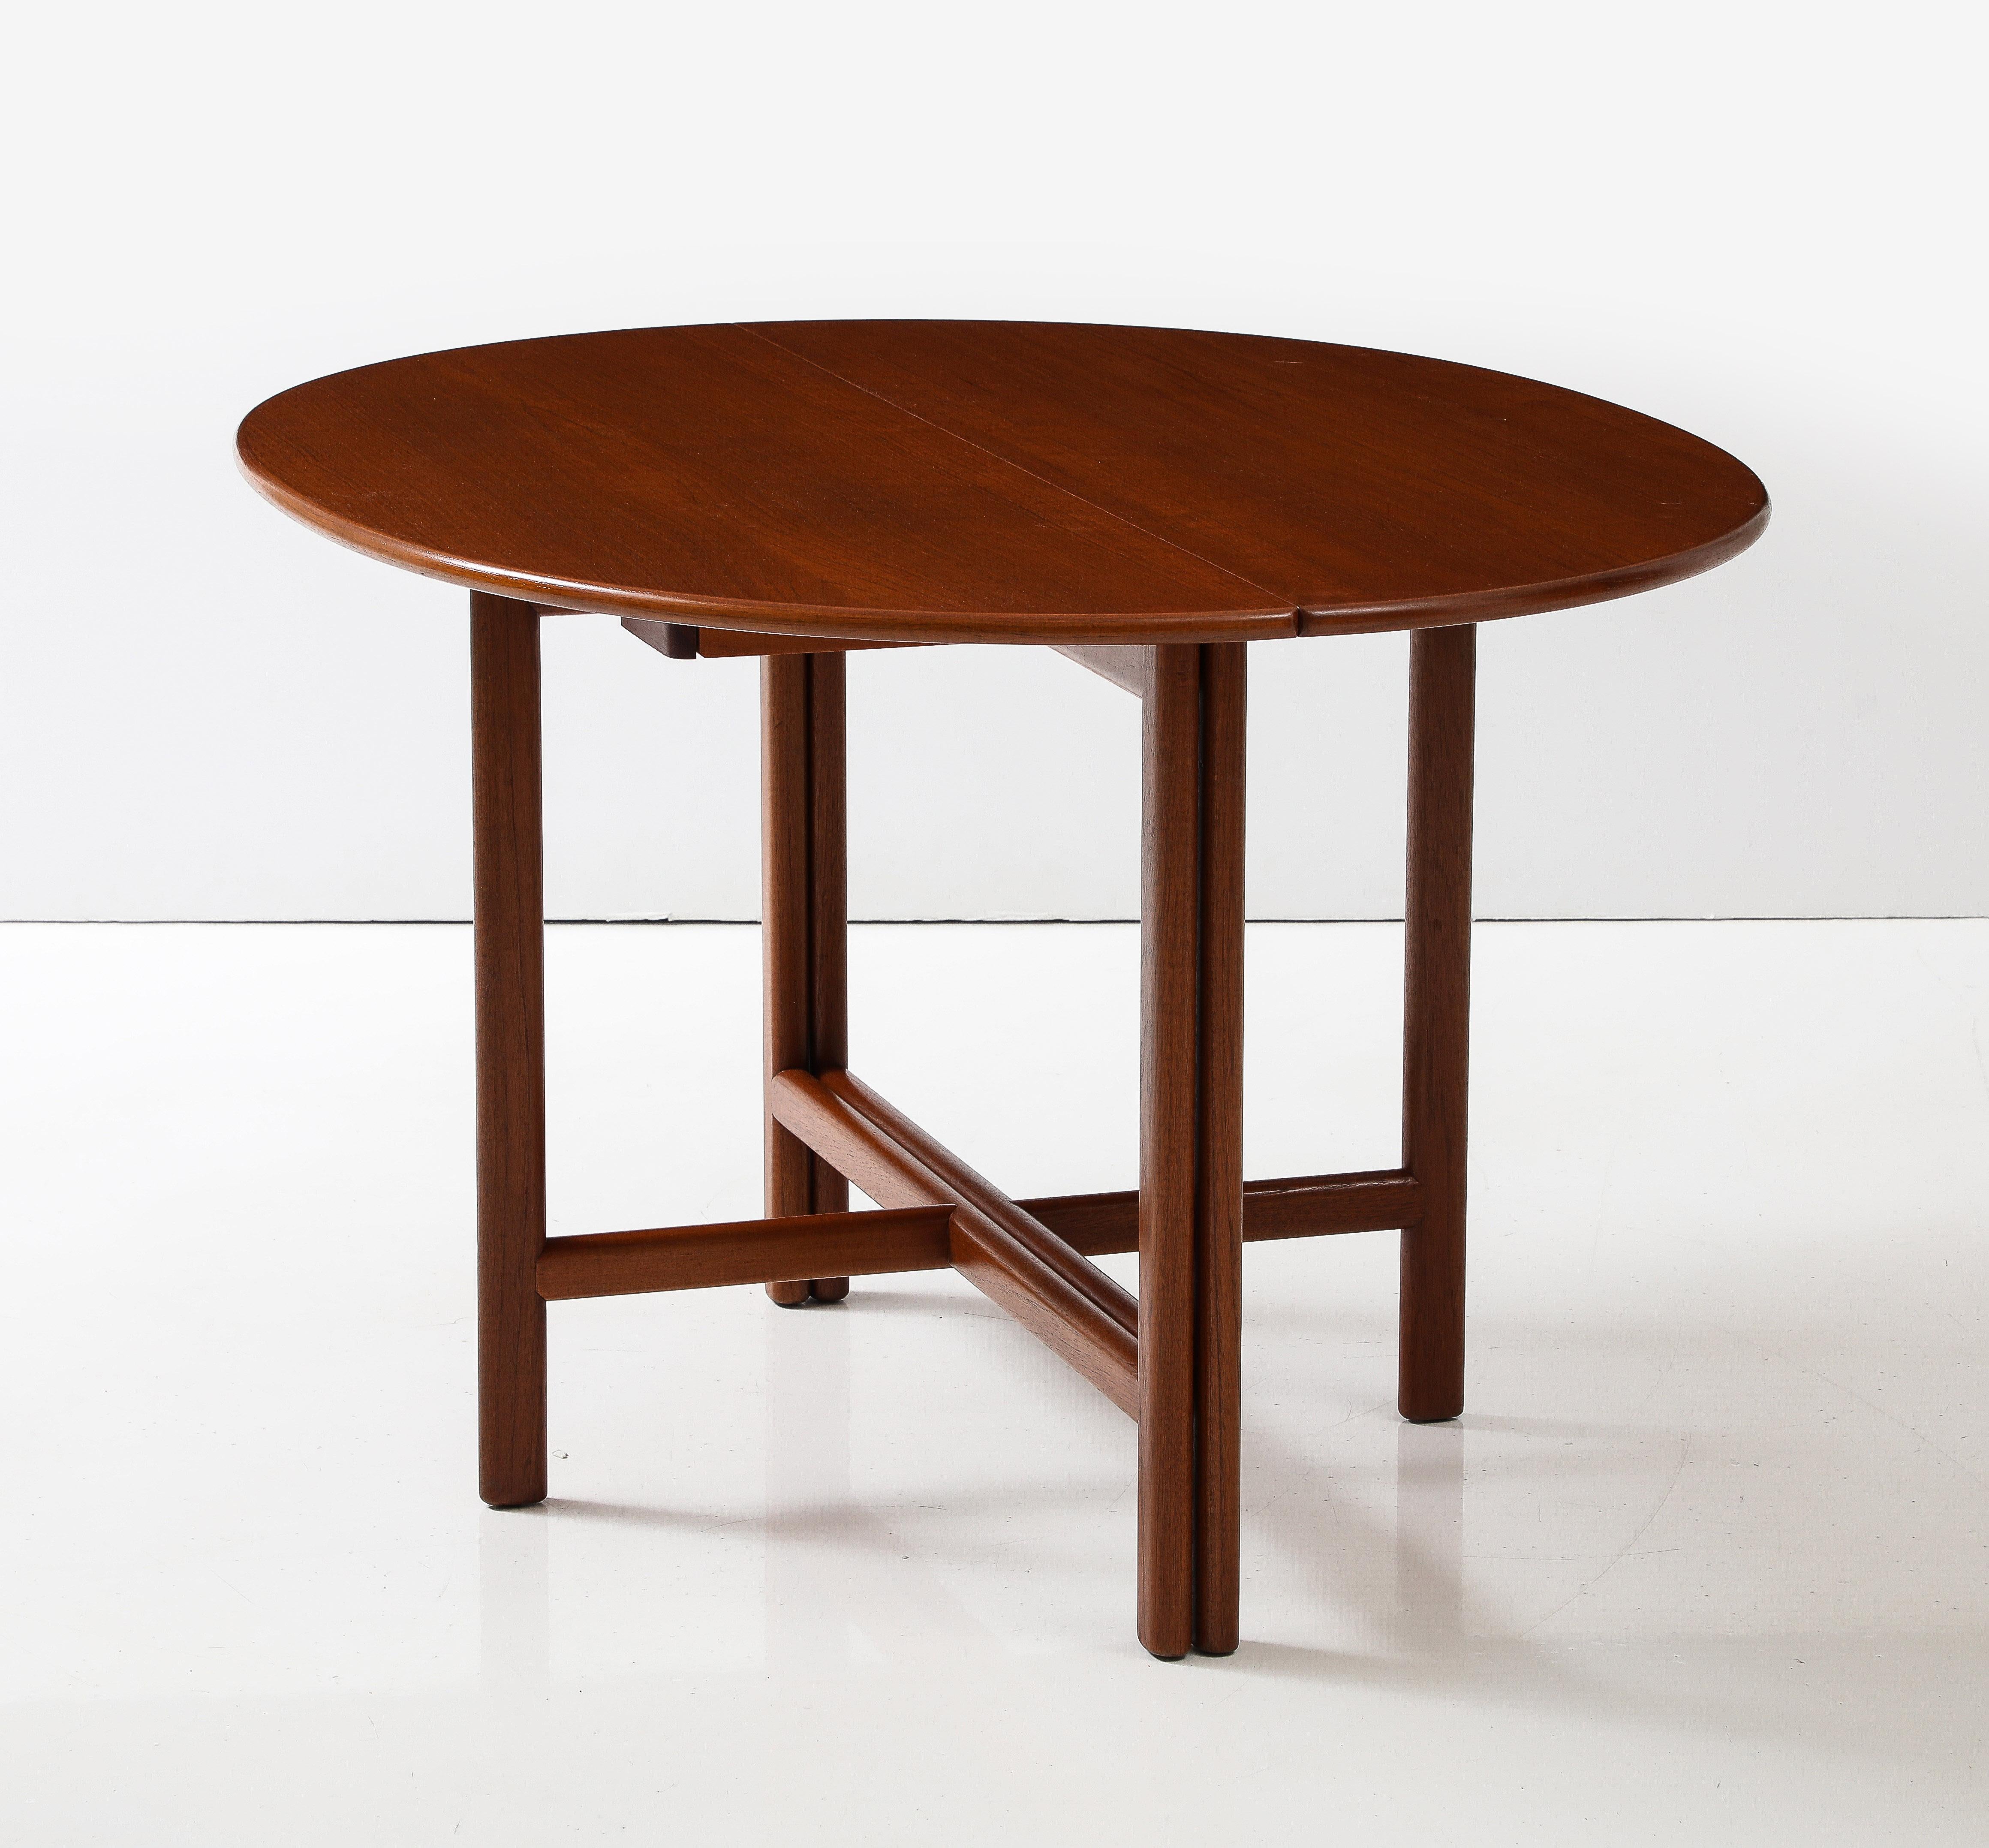 1960's Teak Dining Table Designed By Karl-Erik Ekselius For JOC With 3 Leaves For Sale 5